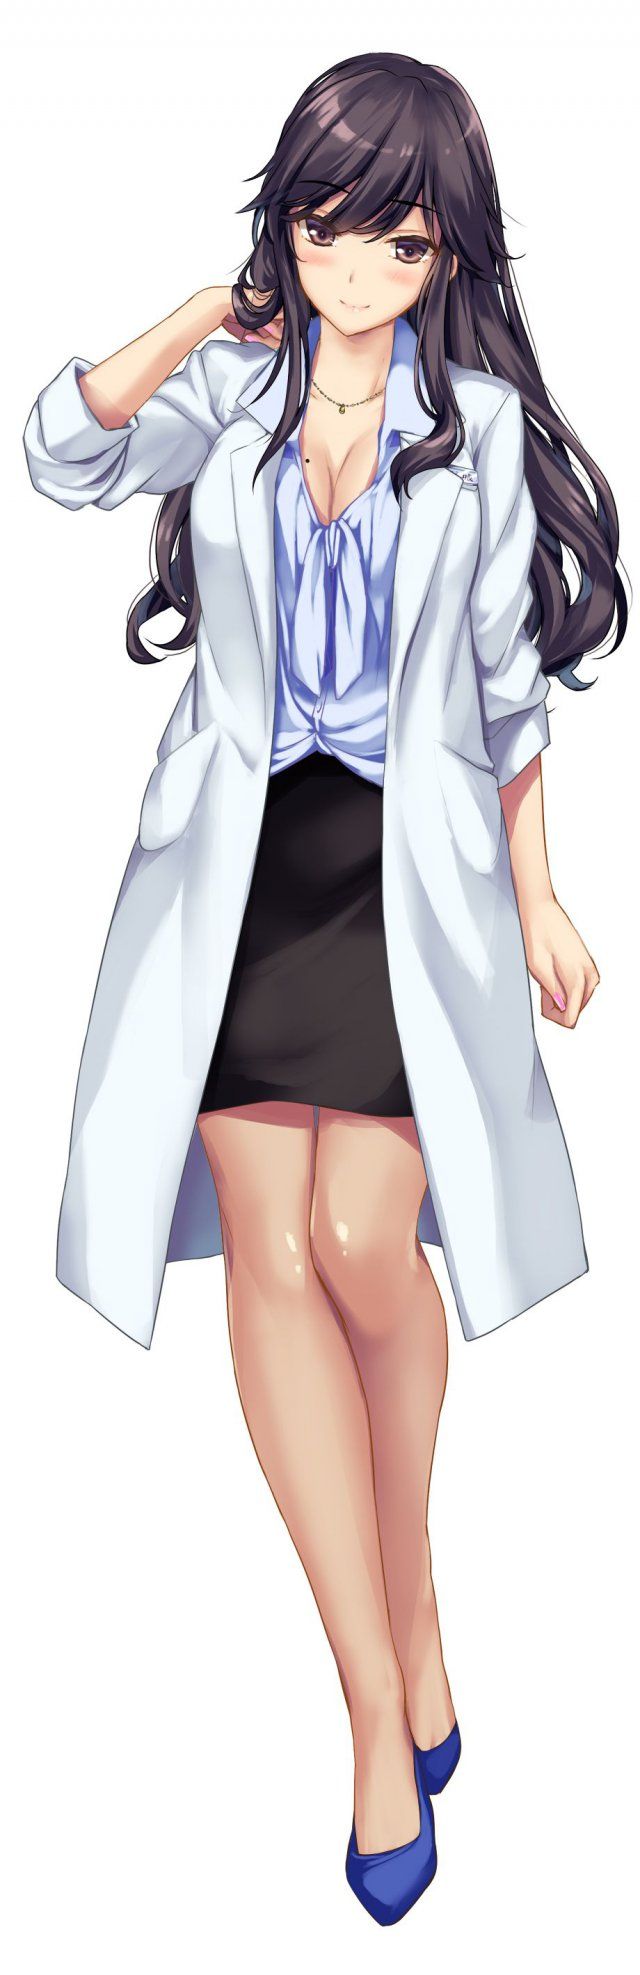 【Secondary】Nurse / Female Doctor [Image] Part 3 33